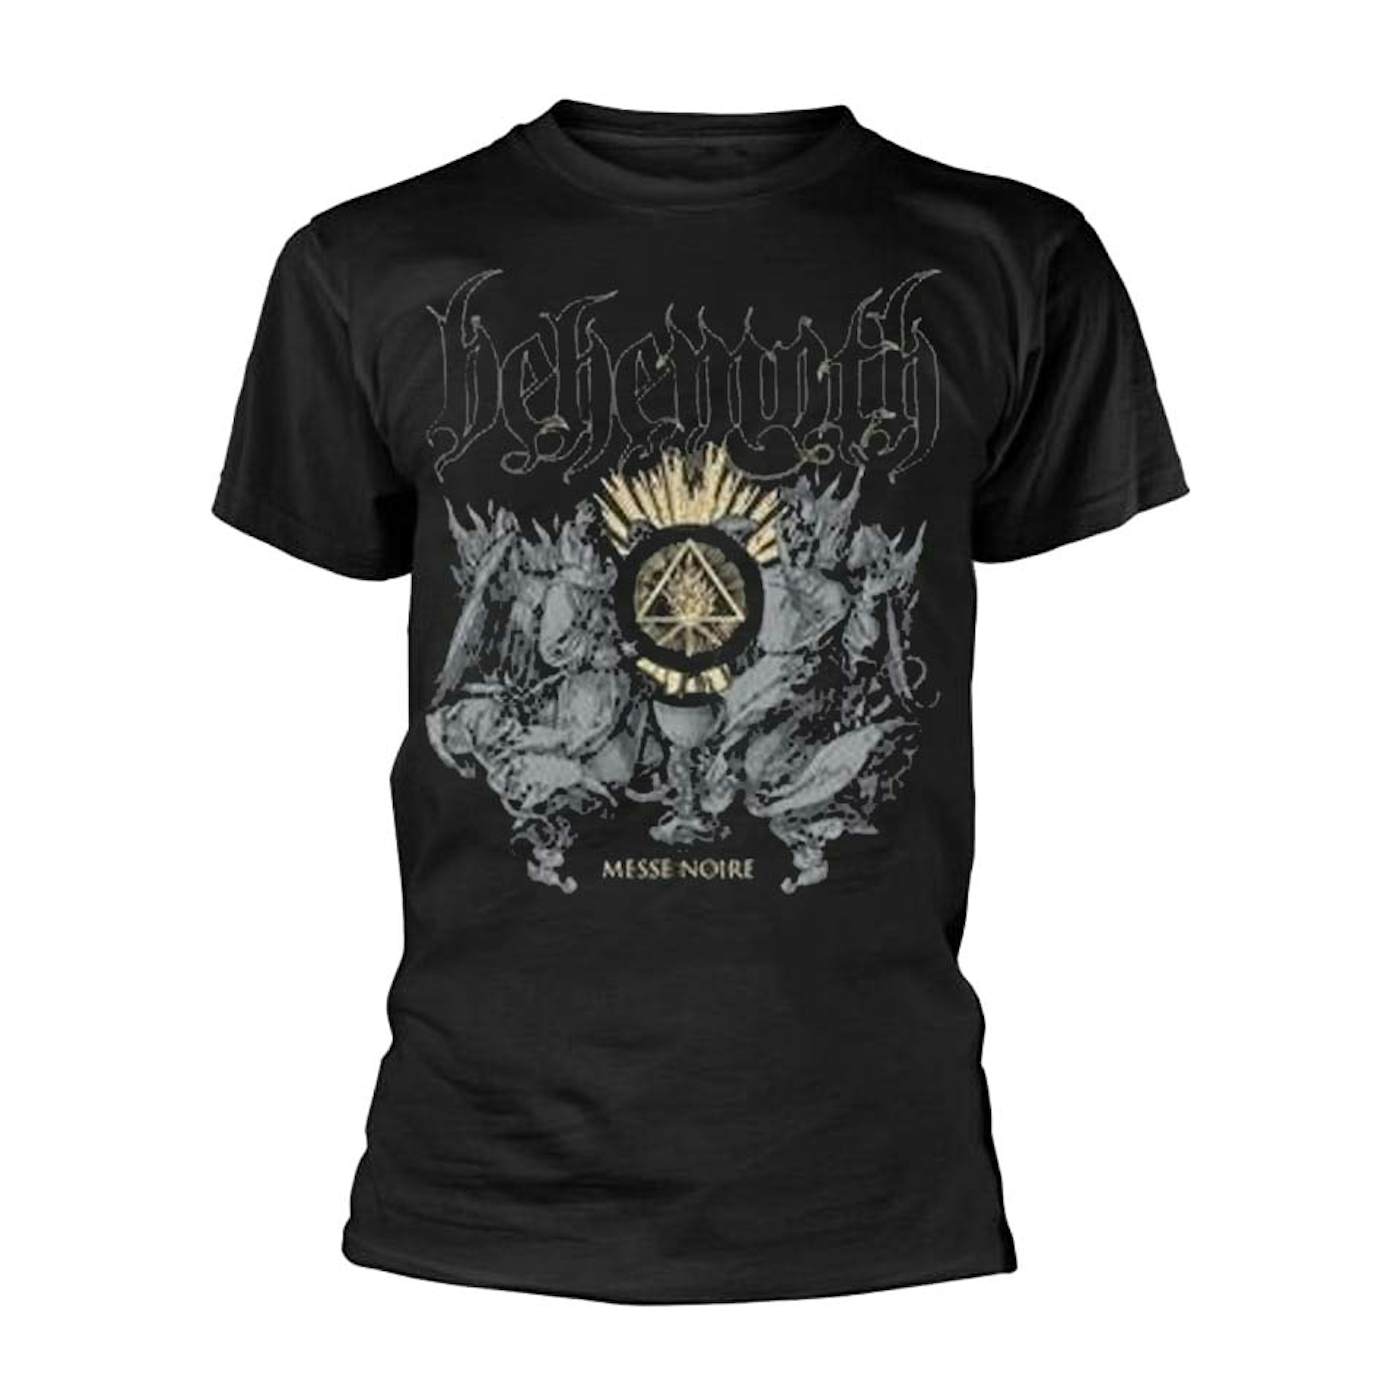 Behemoth T-Shirt - Messe Noire